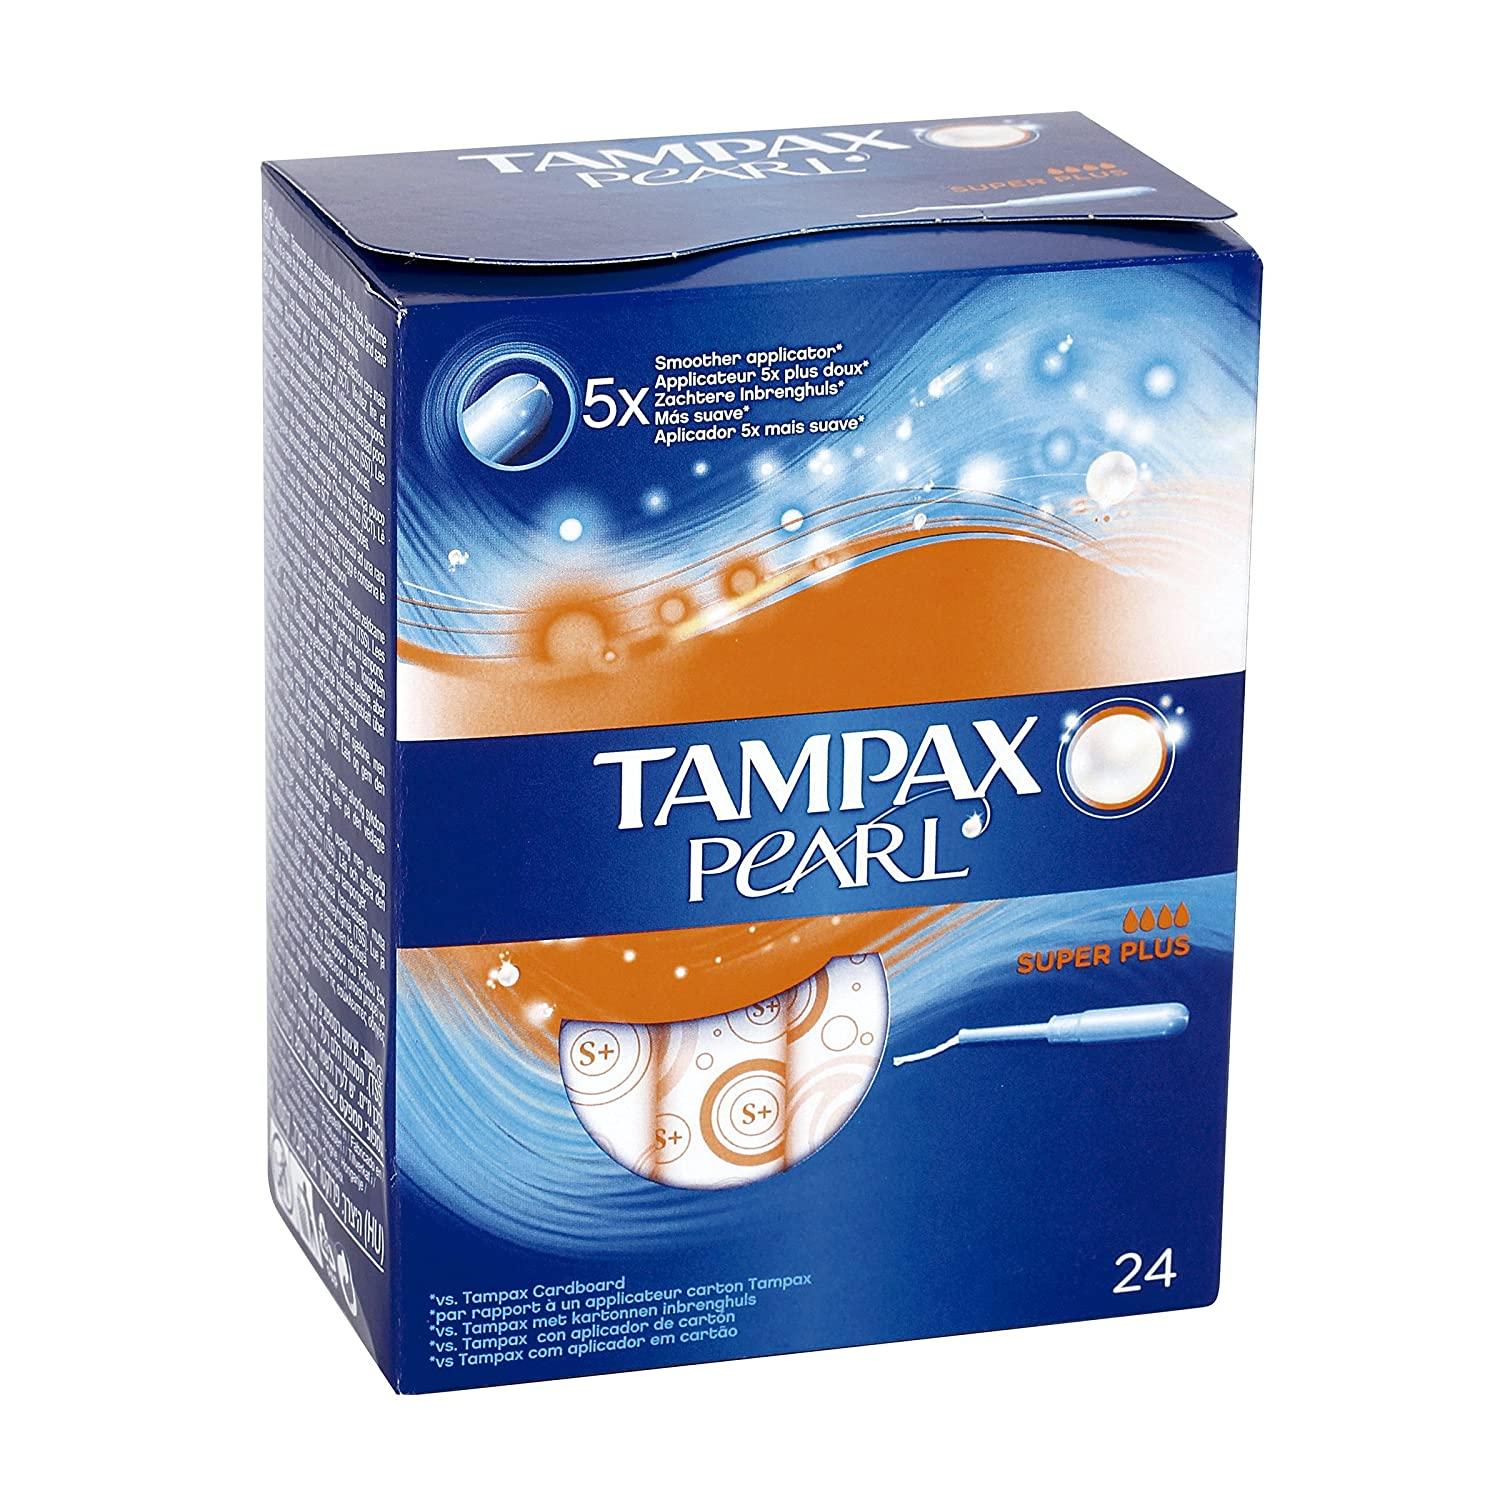 Tampax pearl 24u superplus